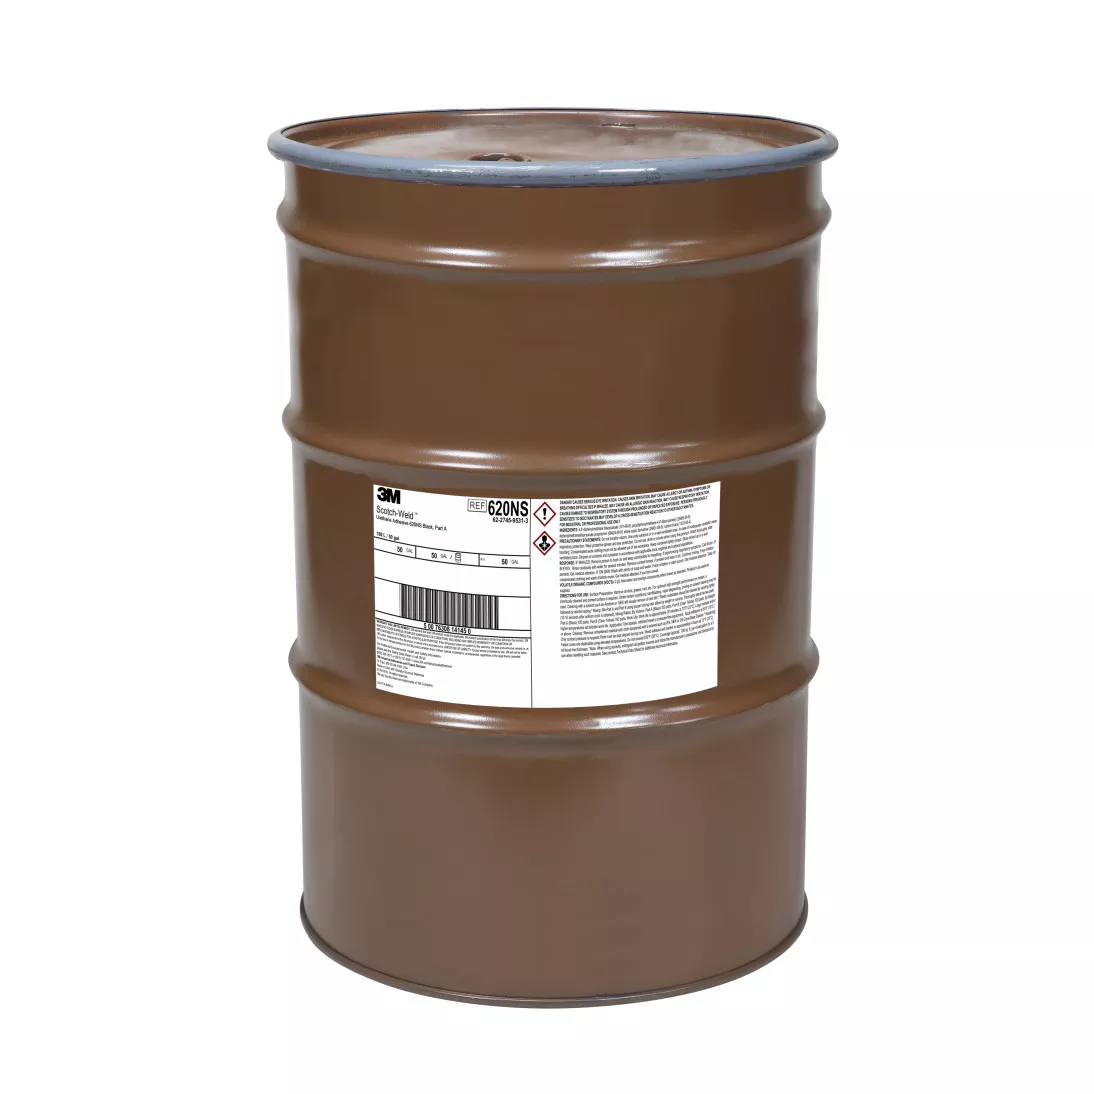 3M™ Scotch-Weld™ Urethane Adhesive 620NS, Black, Part A, 55 Gallon Drum
(50 Gallon Net)